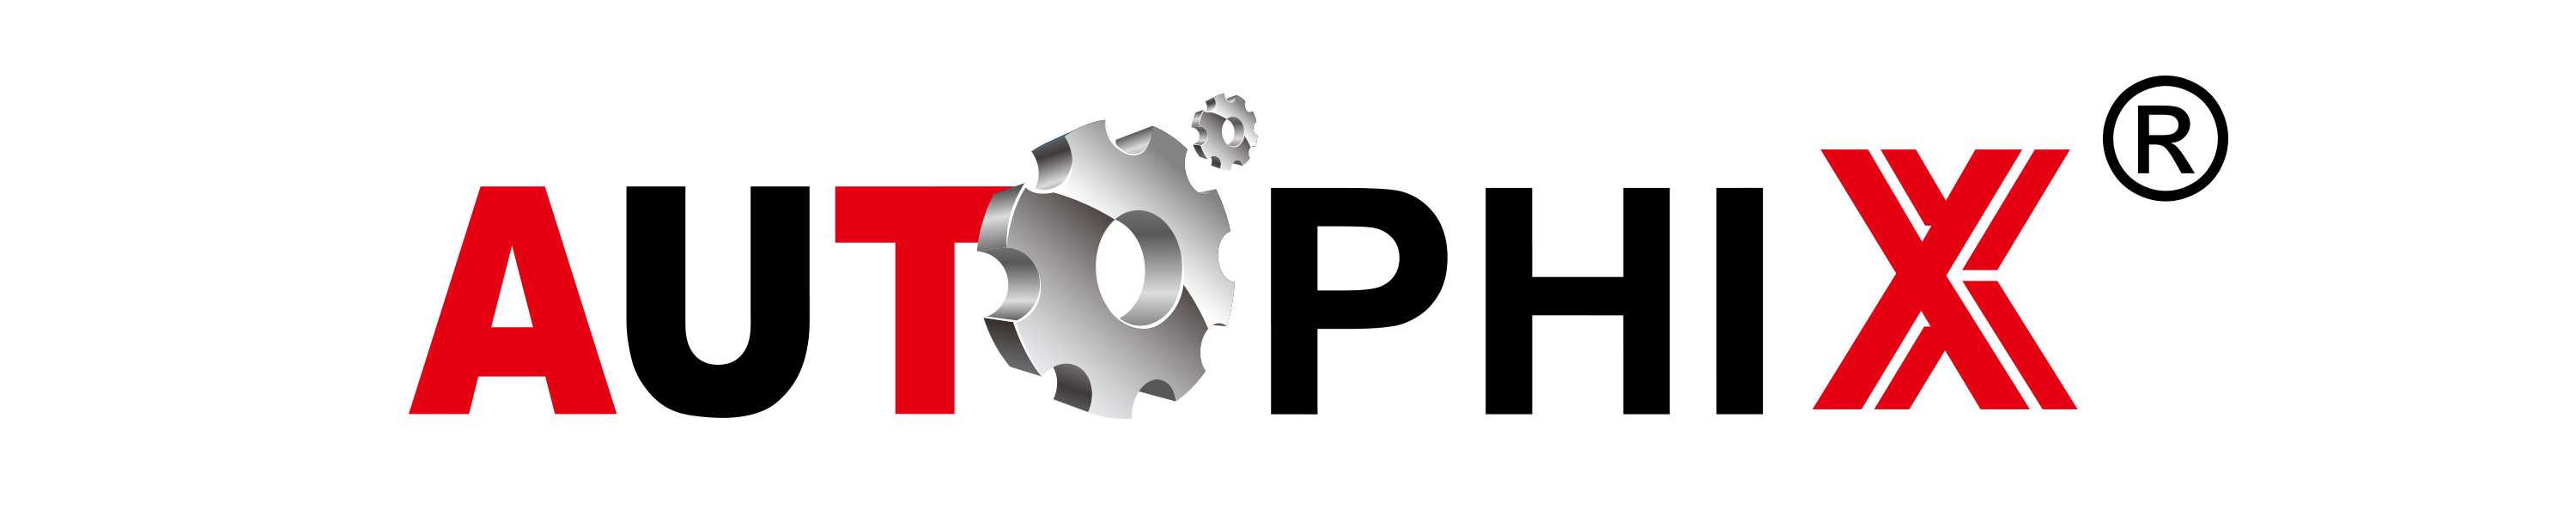 autophix logo